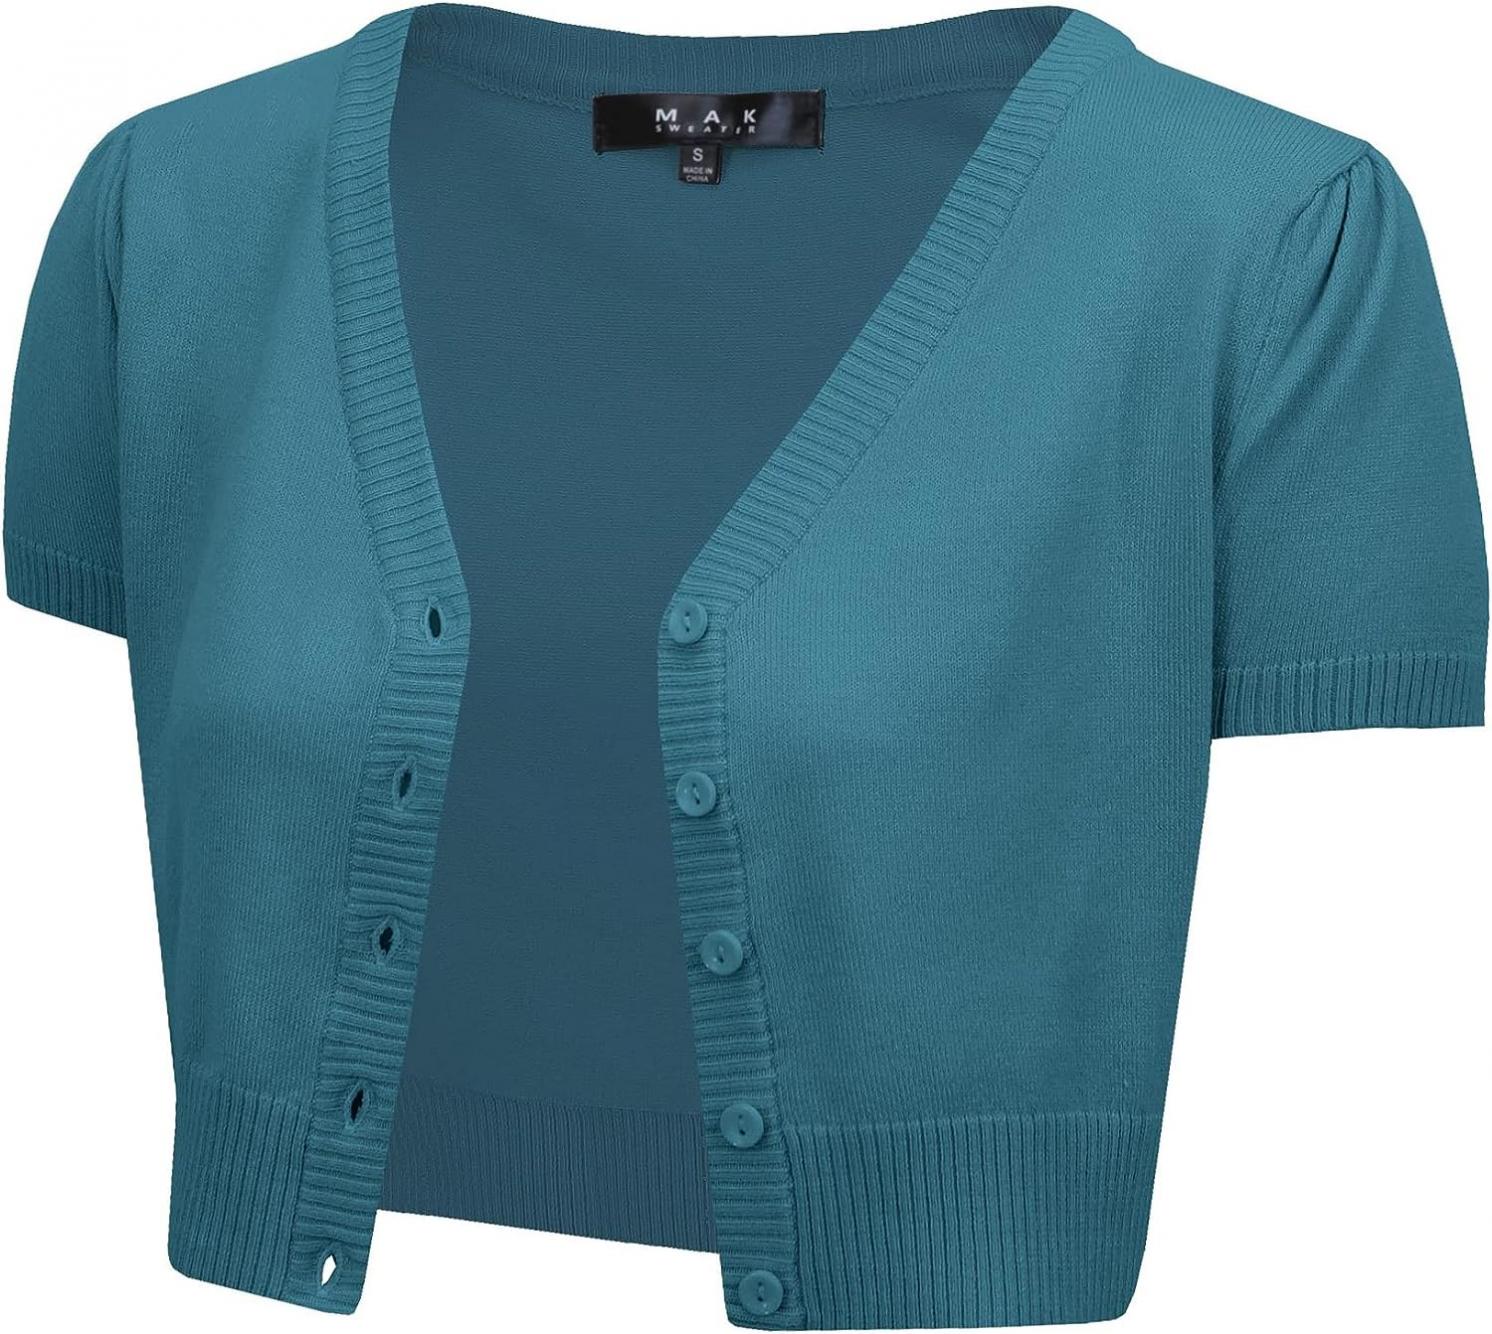 YEMAK Women's Cropped Bolero Cardigan – Short Sleeve V-Neck Basic Classic Casual Button Down Knit Soft Sweater Top (S-4XL)